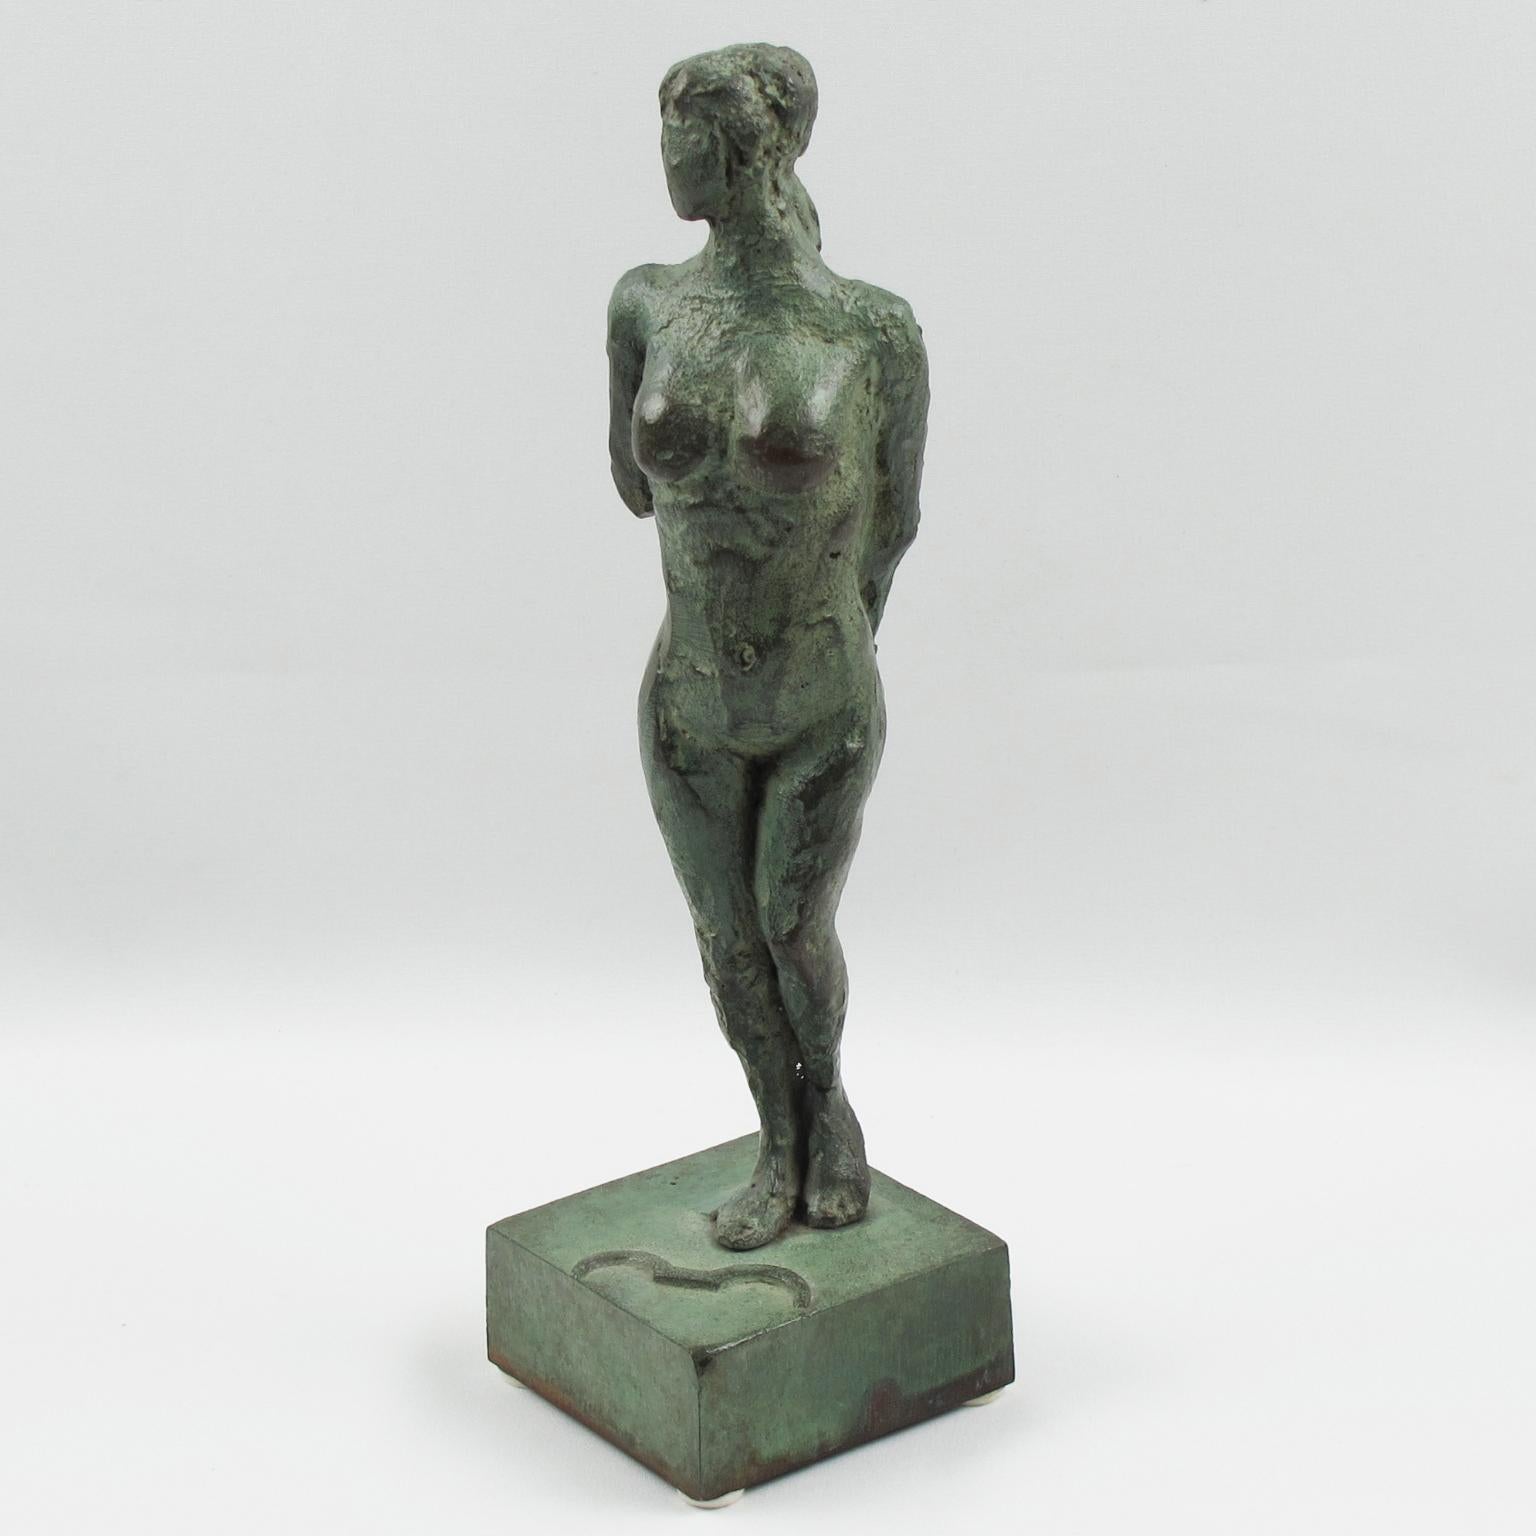 French Art Deco Bronze Sculpture Artemis, Diana the Huntress, France 1930s